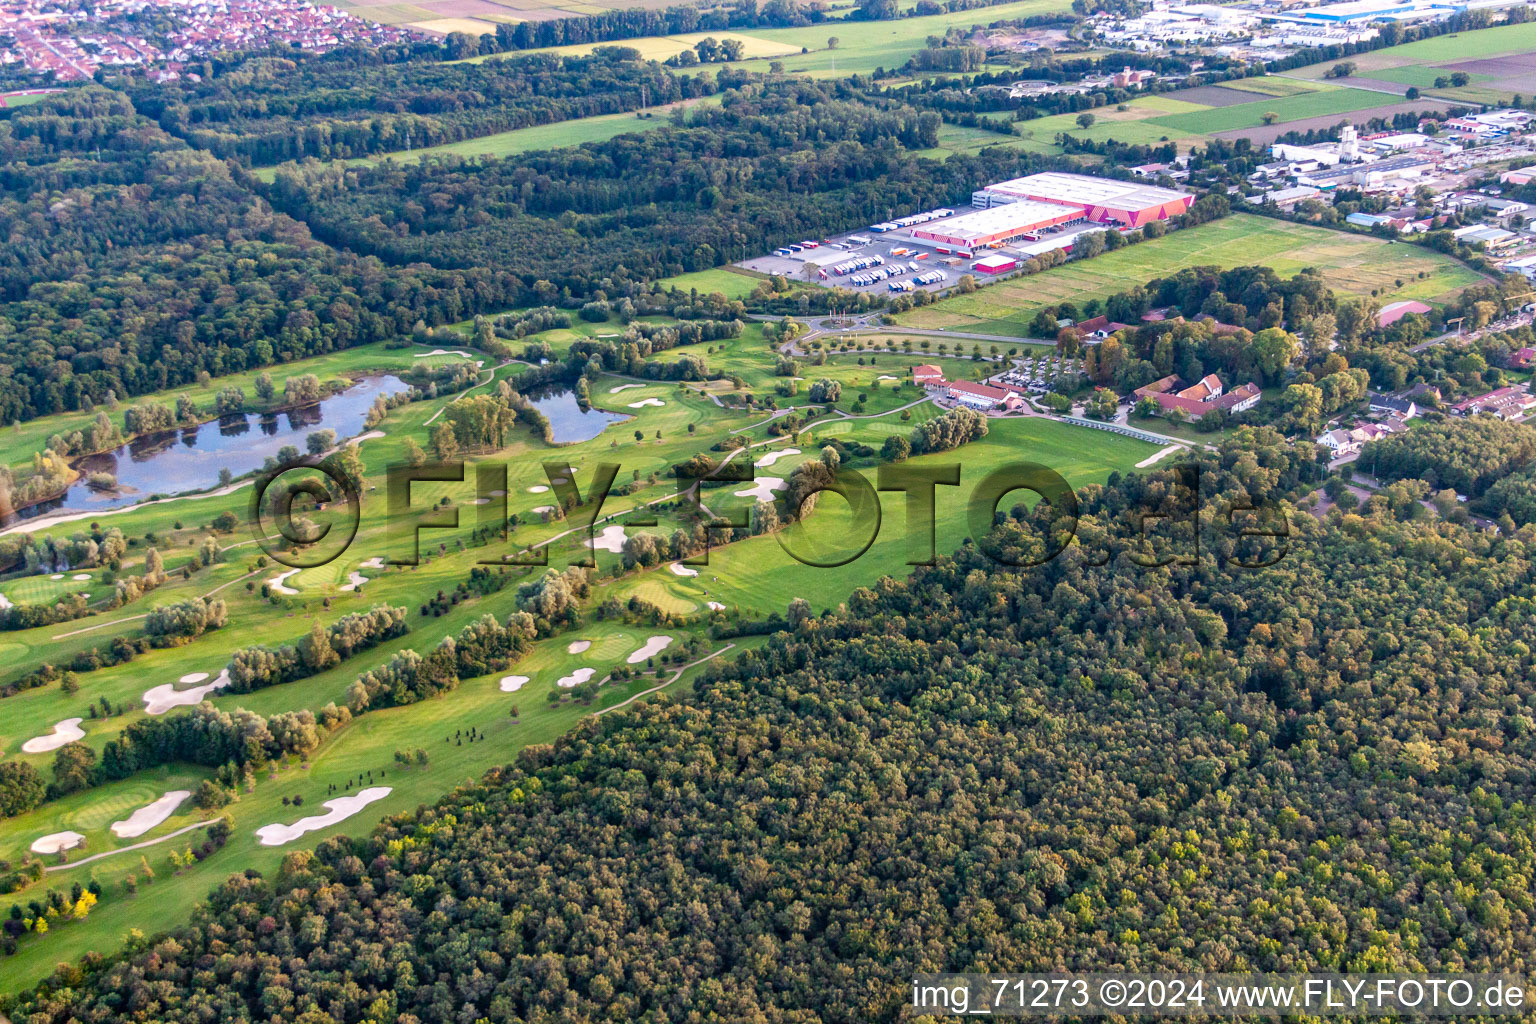 Aerial view of Dreihof Golf Club in Essingen in the state Rhineland-Palatinate, Germany